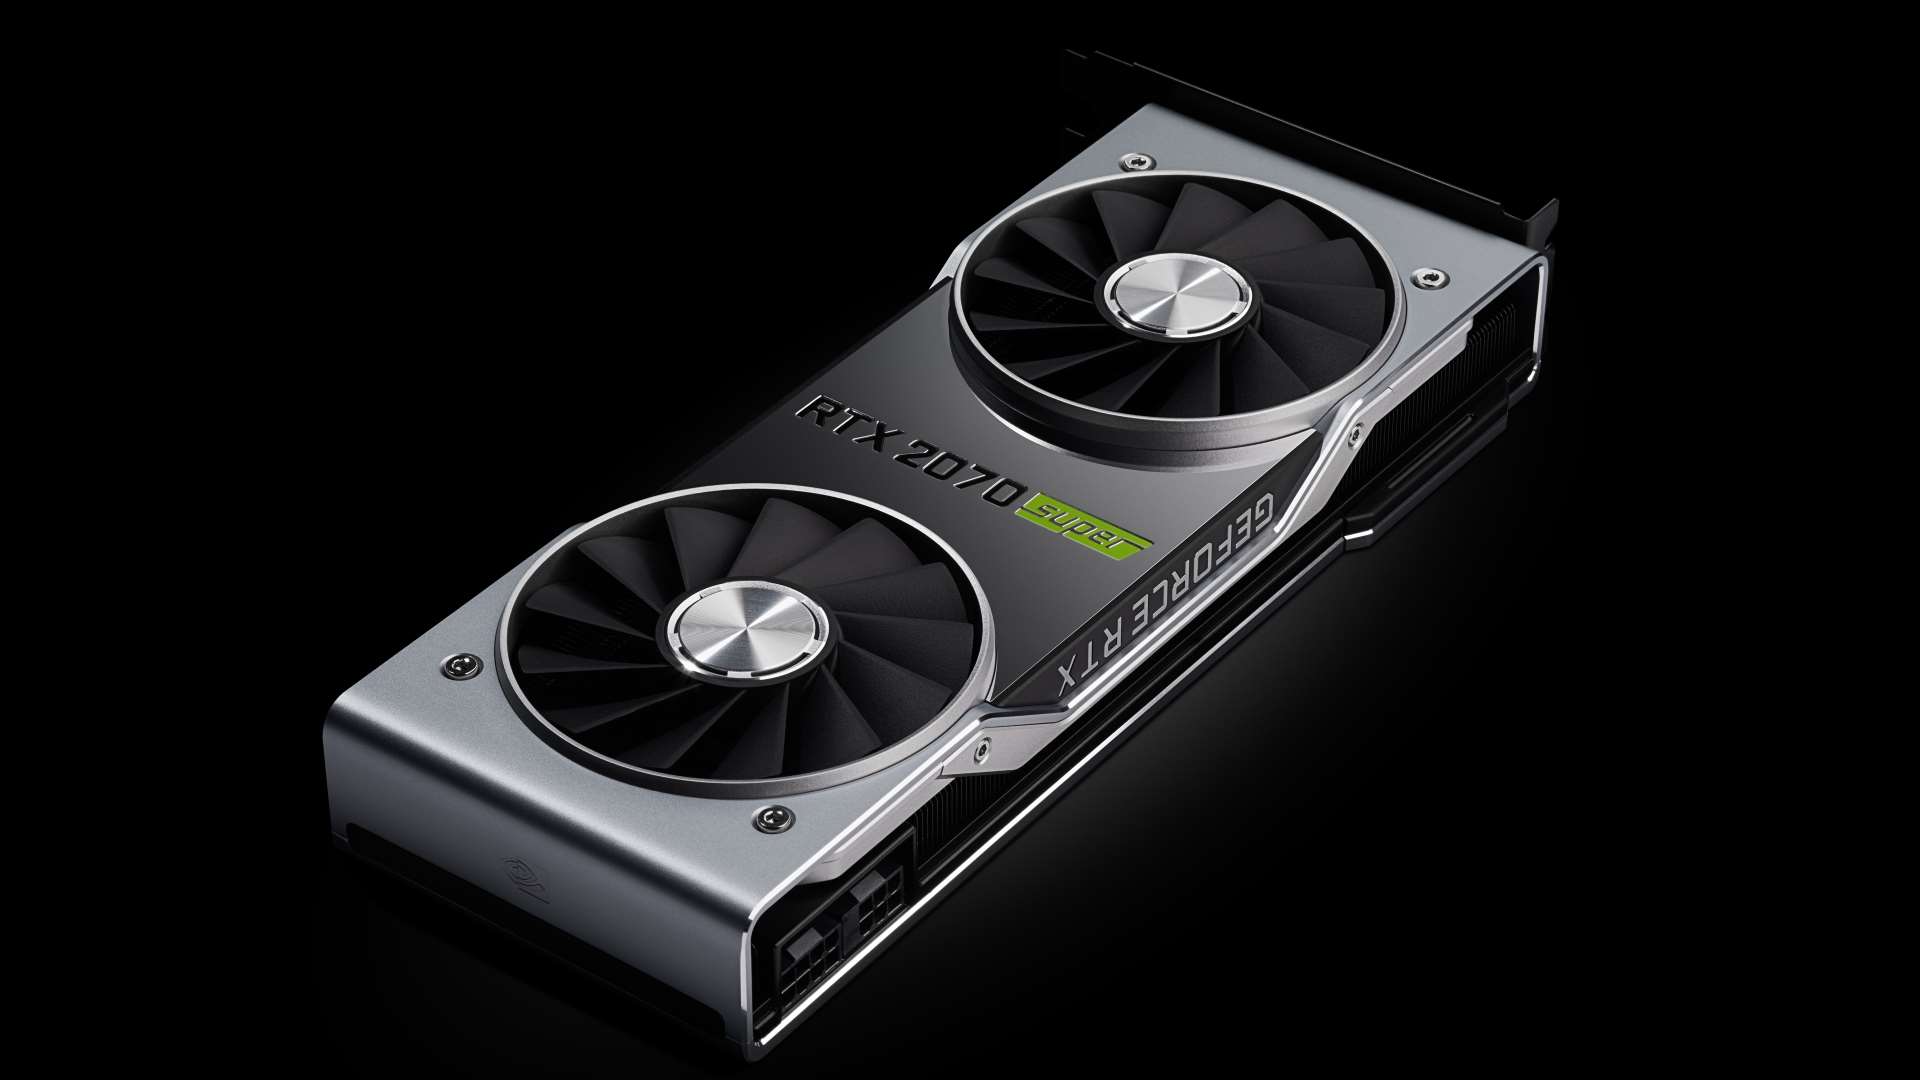 Nvidia RTX 2070 Super review: the RX 5700 XT runs it close, GeForce just has the edge | PCGamesN